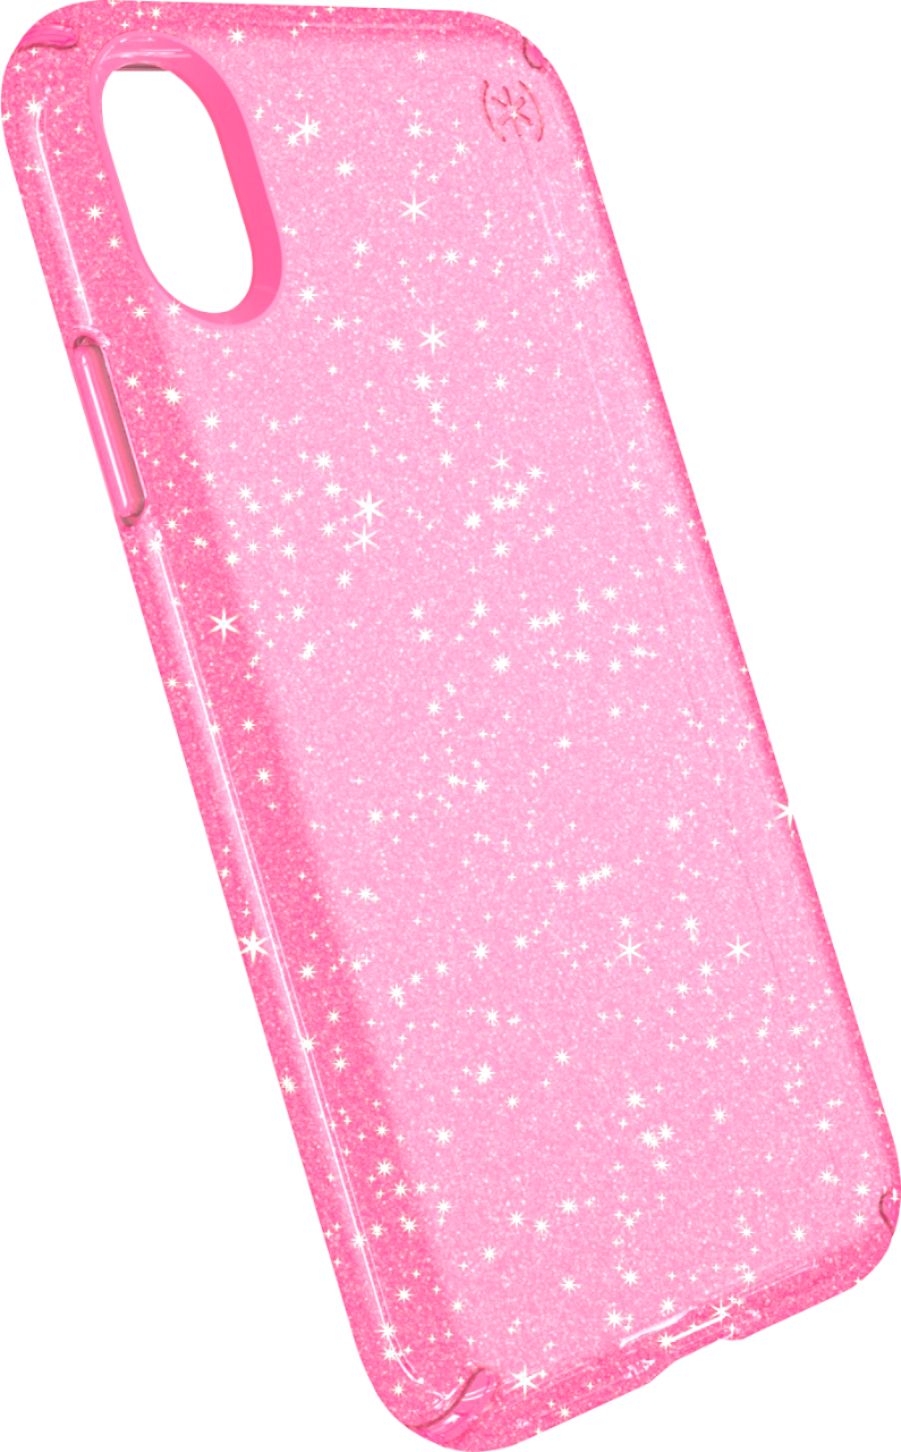 Speck Presidio Clear + Glitter Bella Pink with Gold Glitter iPhone Xs / x Case